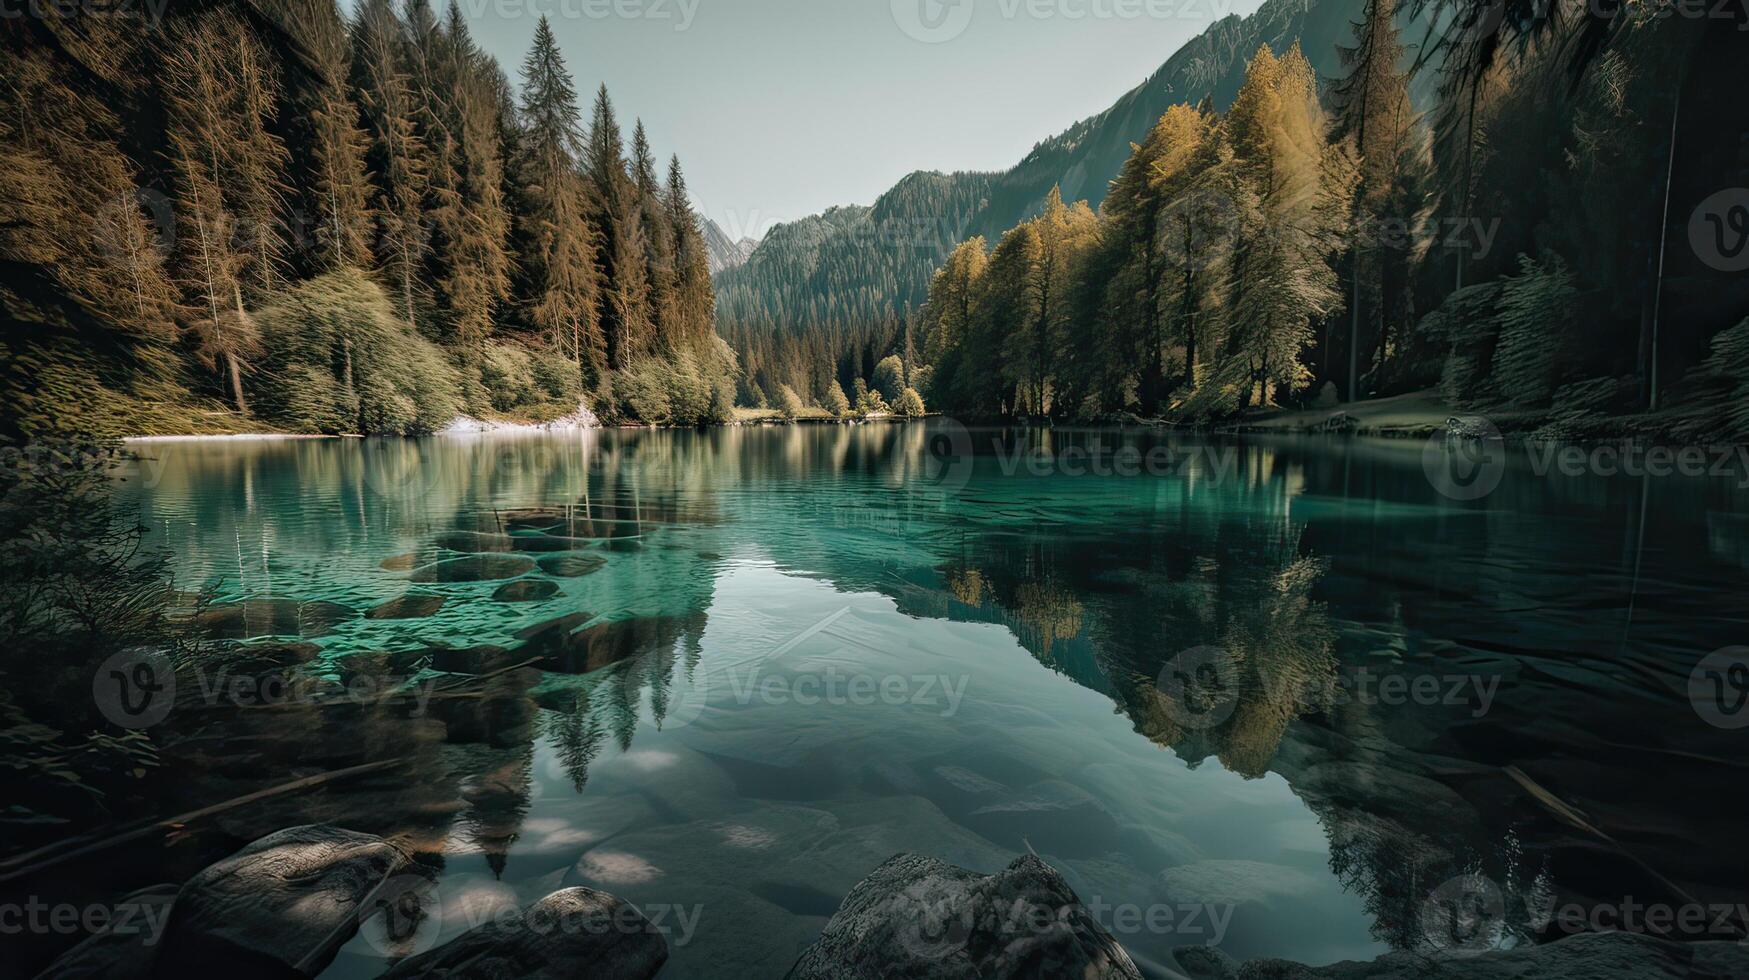 Fantastic mountain lake in Triglav national park. Located in the Bohinj Valley of the Julian Alps. Dramatic unusual scene. Slovenia, Europe. Beauty world. . photo